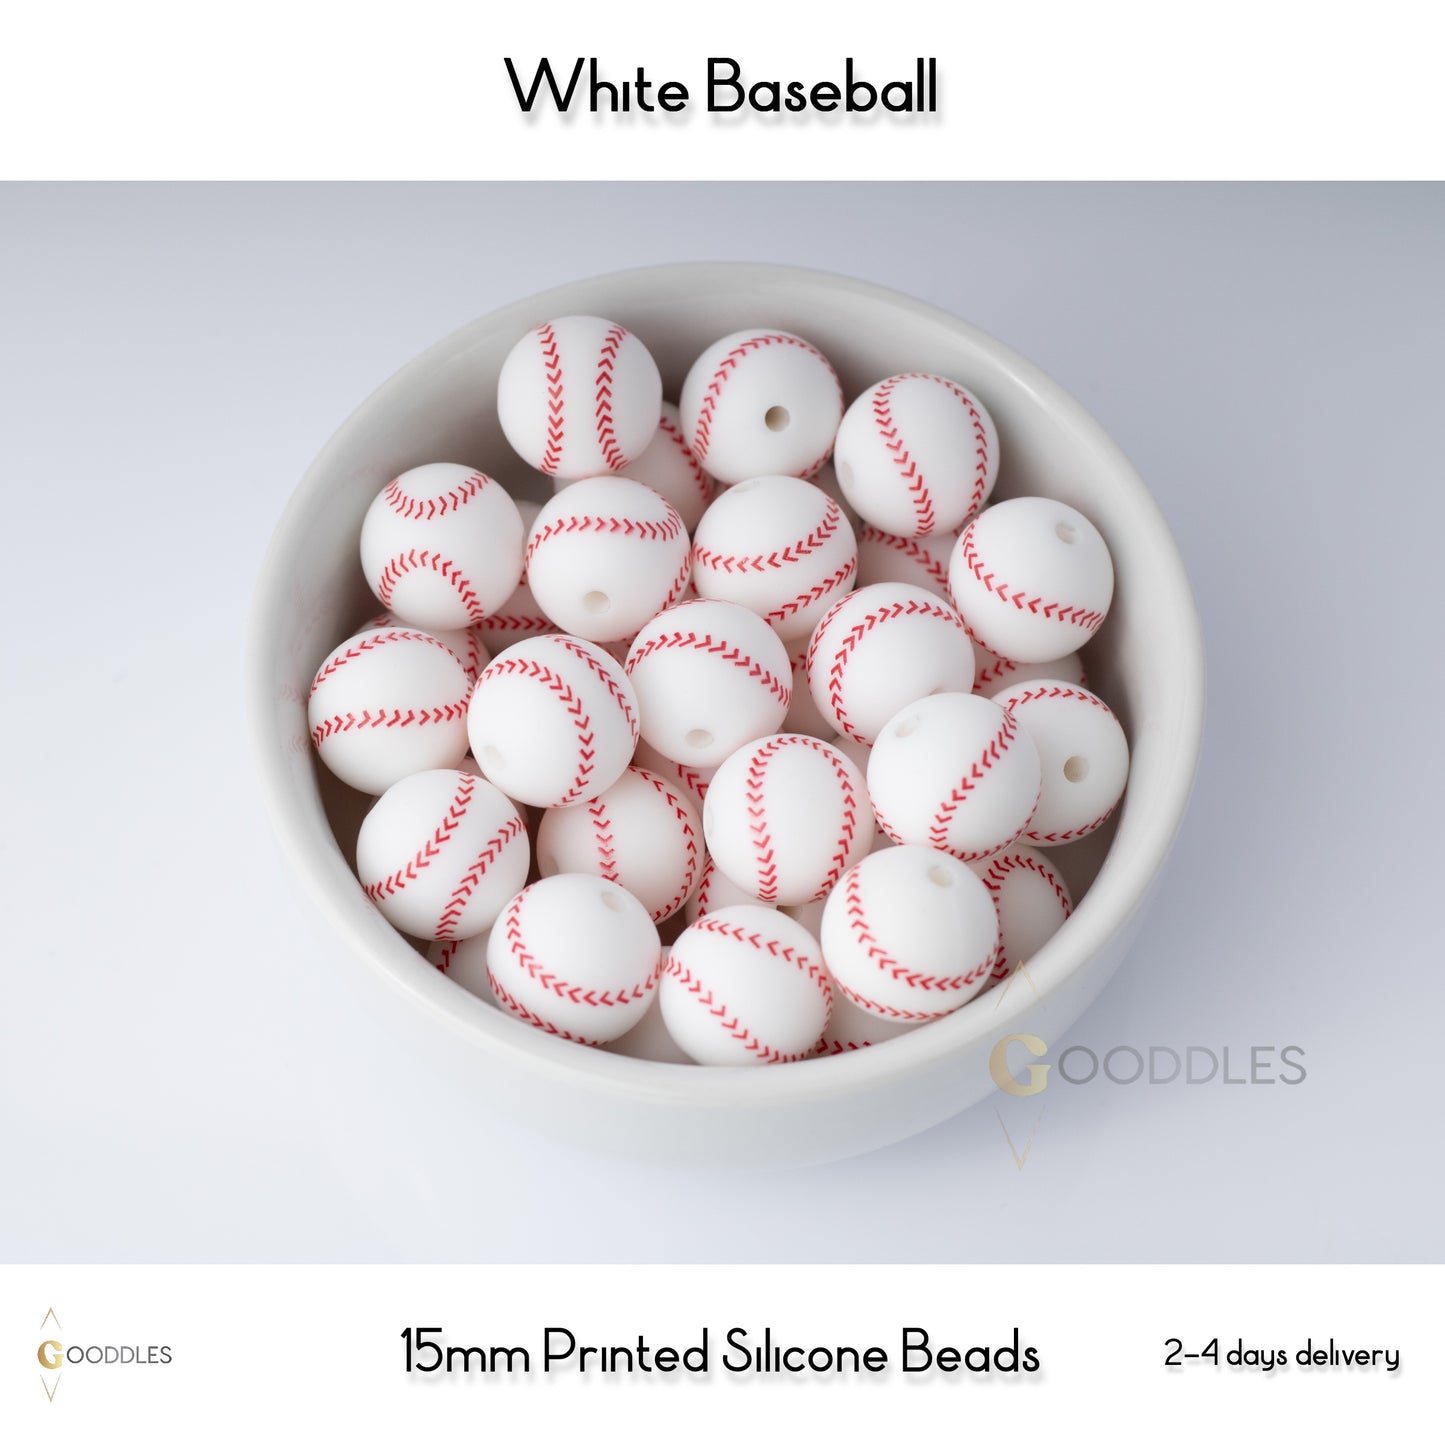 5pcs, White Baseball Silicone Beads Printed Round Silicone Beads